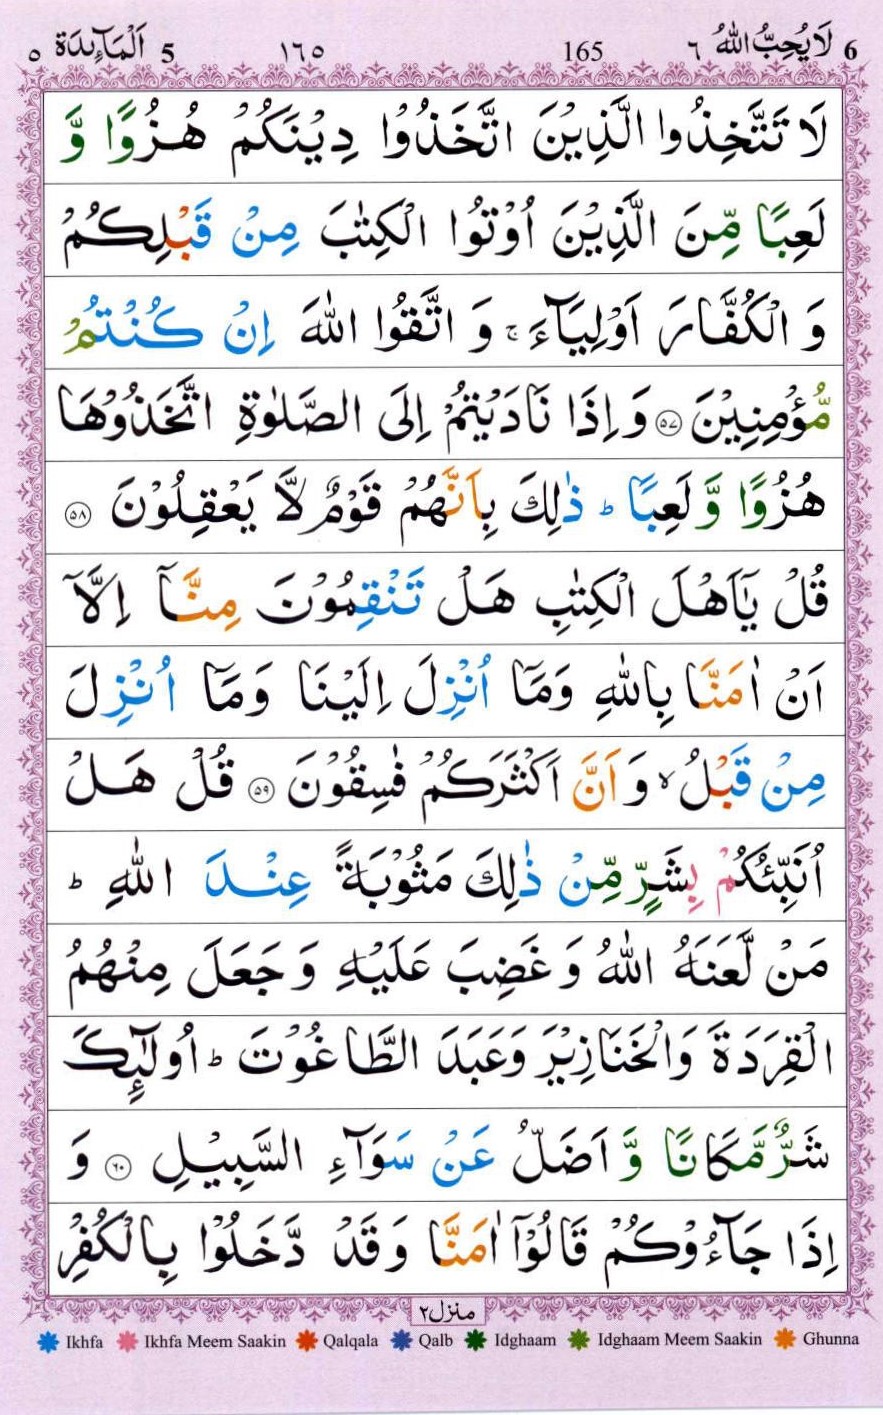 Surah Al Maidah in Arabic